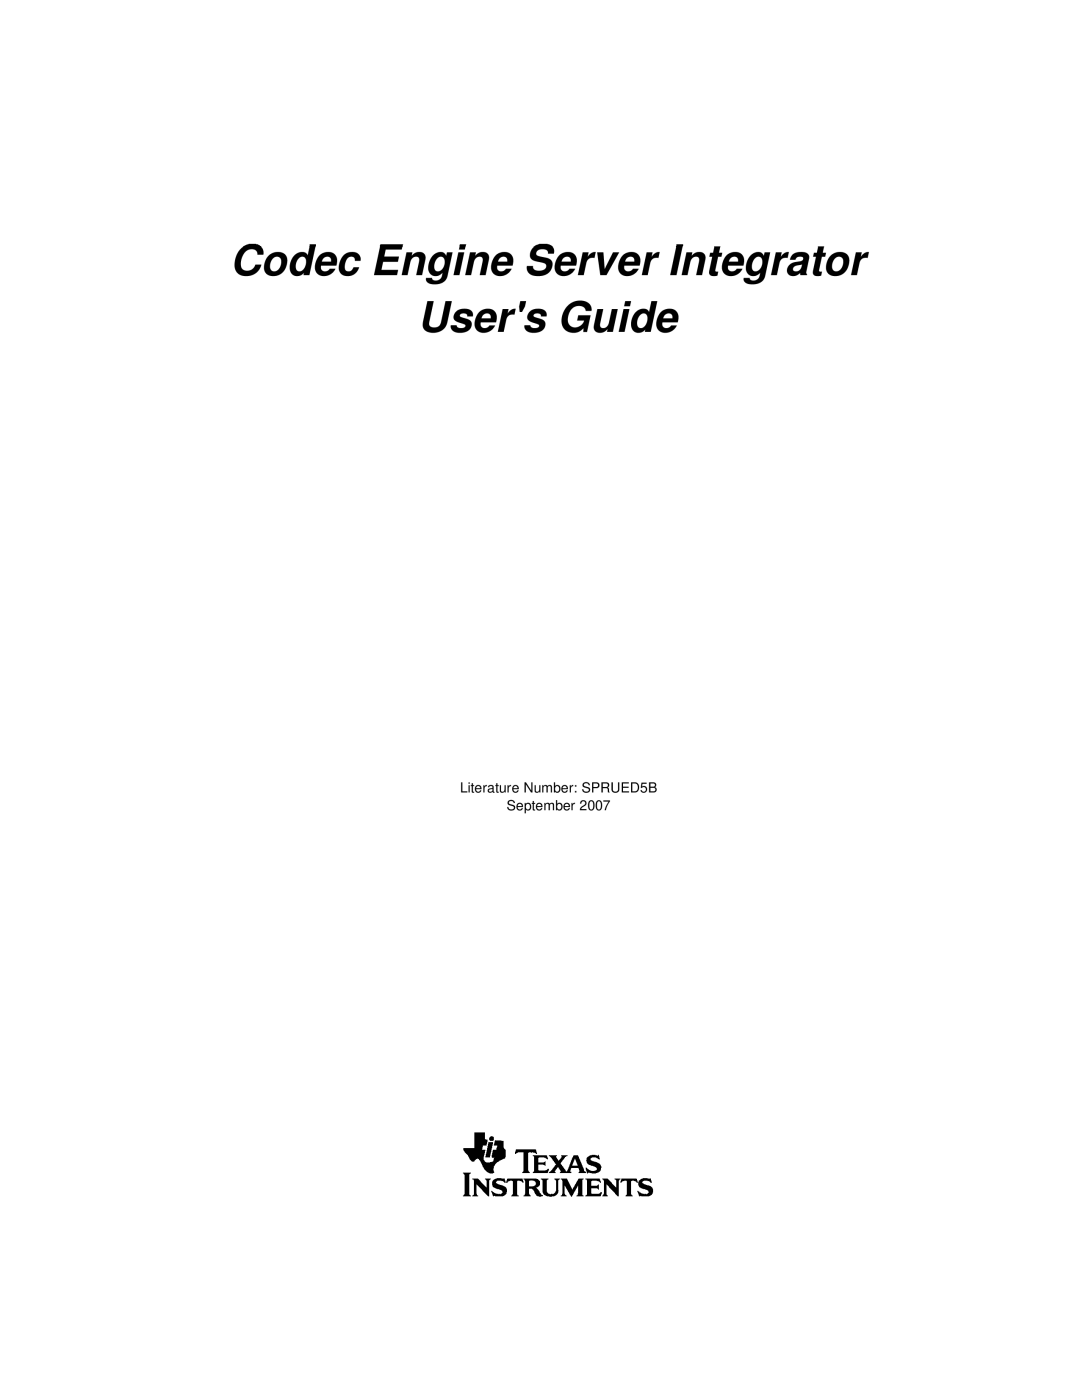 Texas Instruments manual Codec Engine Server Integrator Users Guide, Literature Number SPRUED5B September 